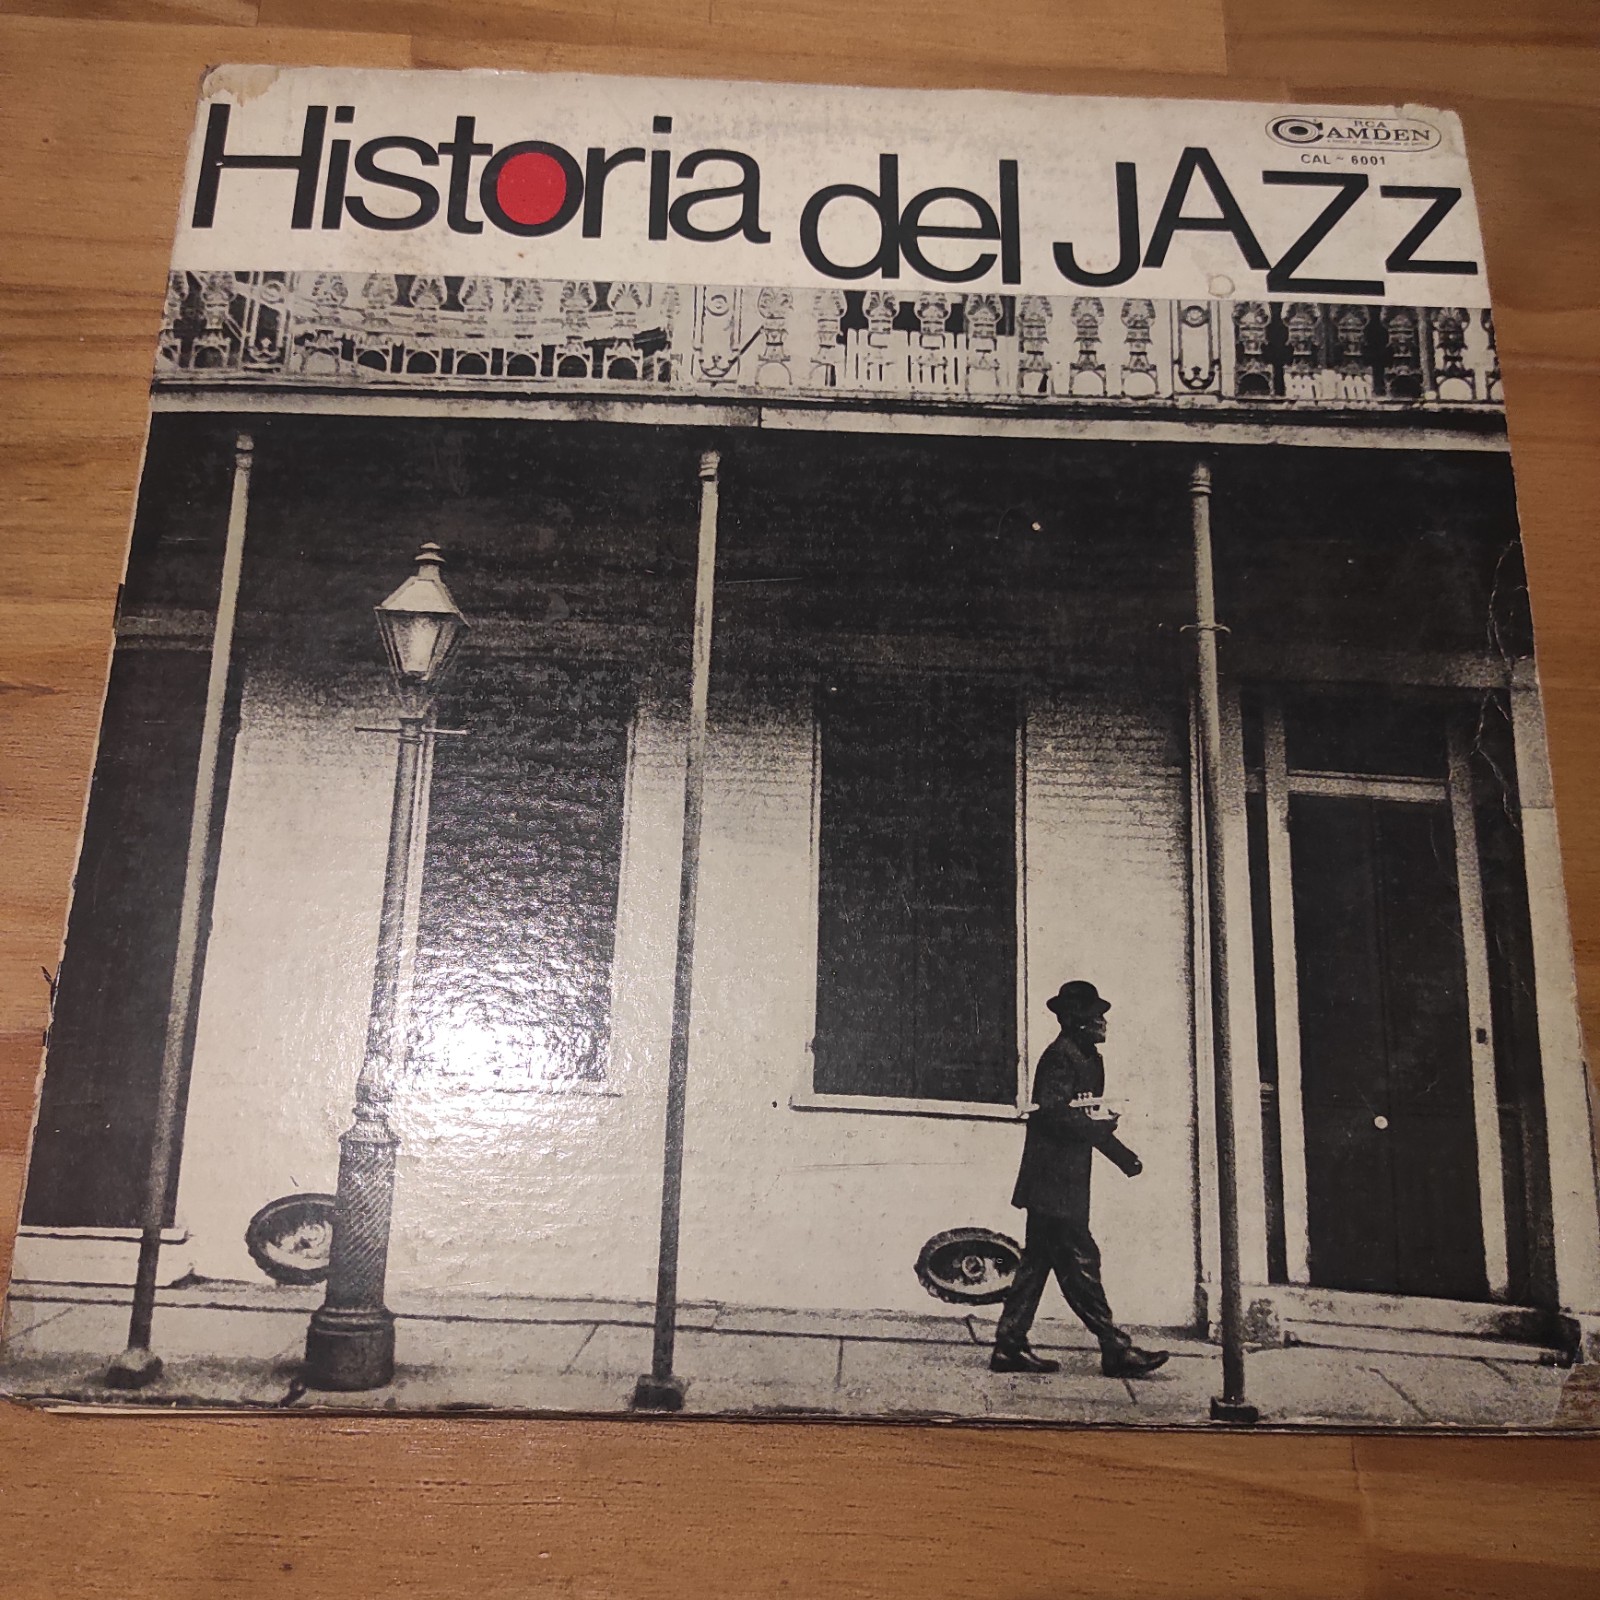 Vinilos - Jazz LP